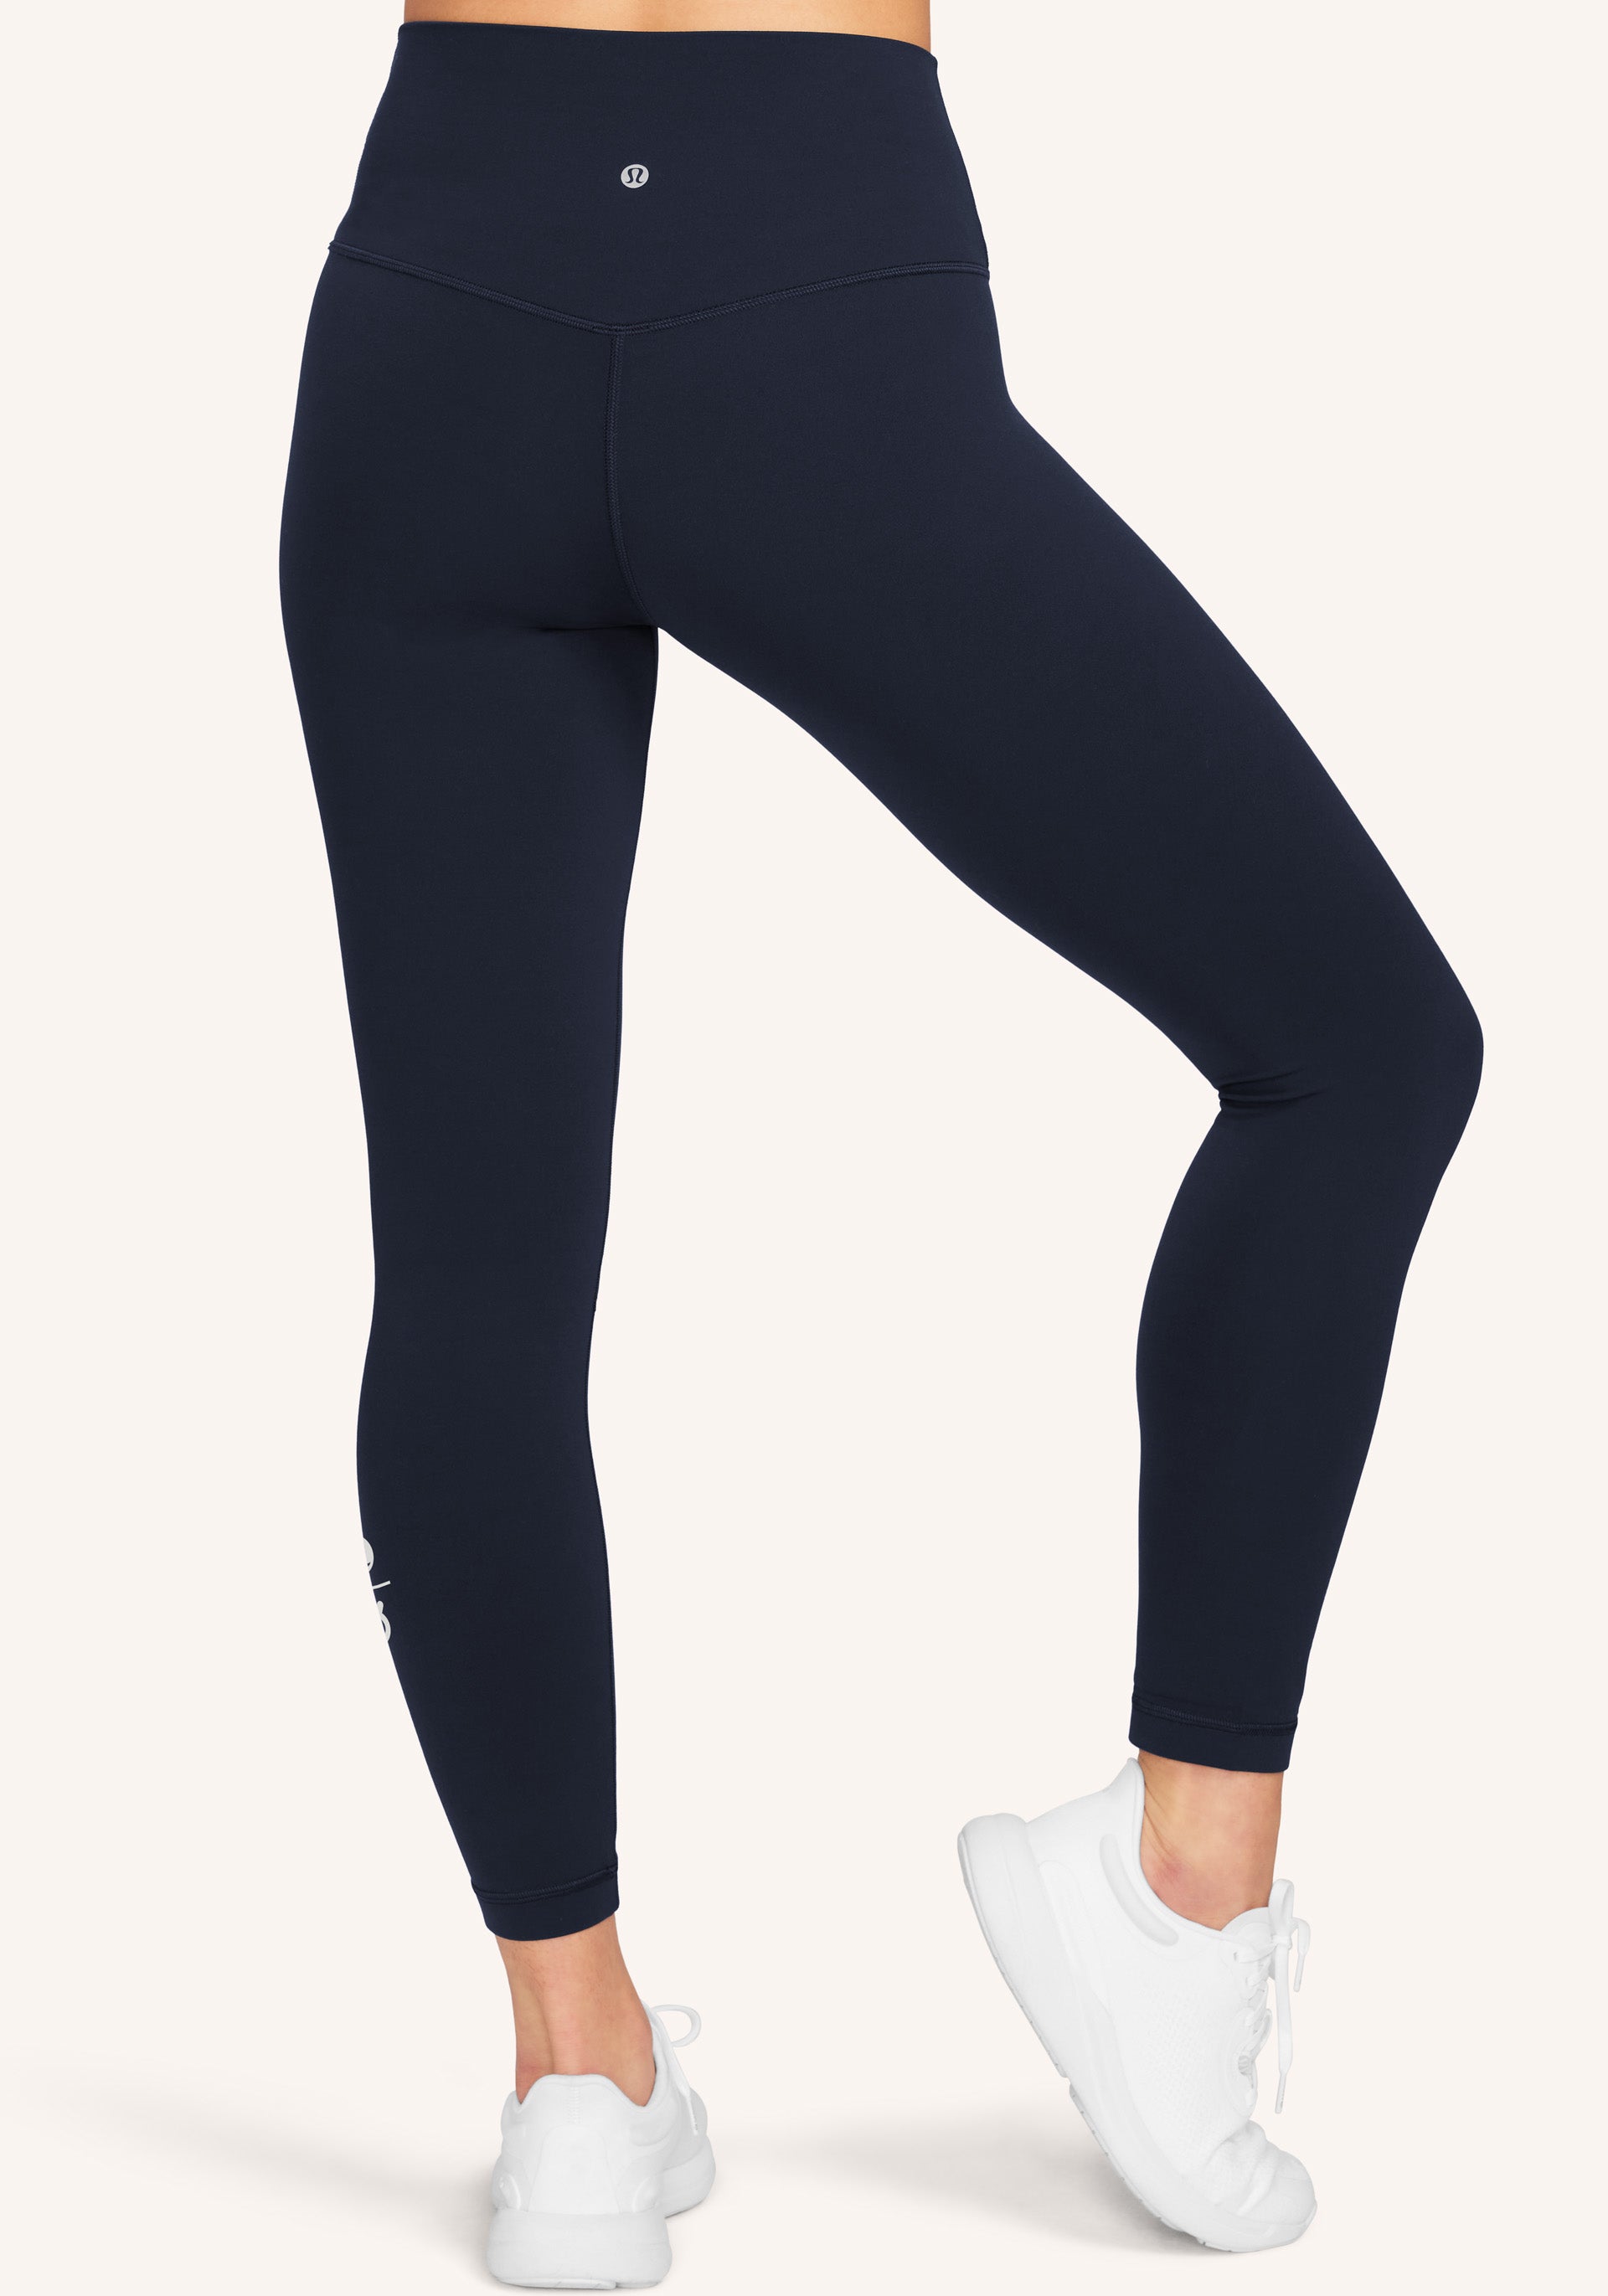 Lululemon 25” align leggings with pockets! Size 4